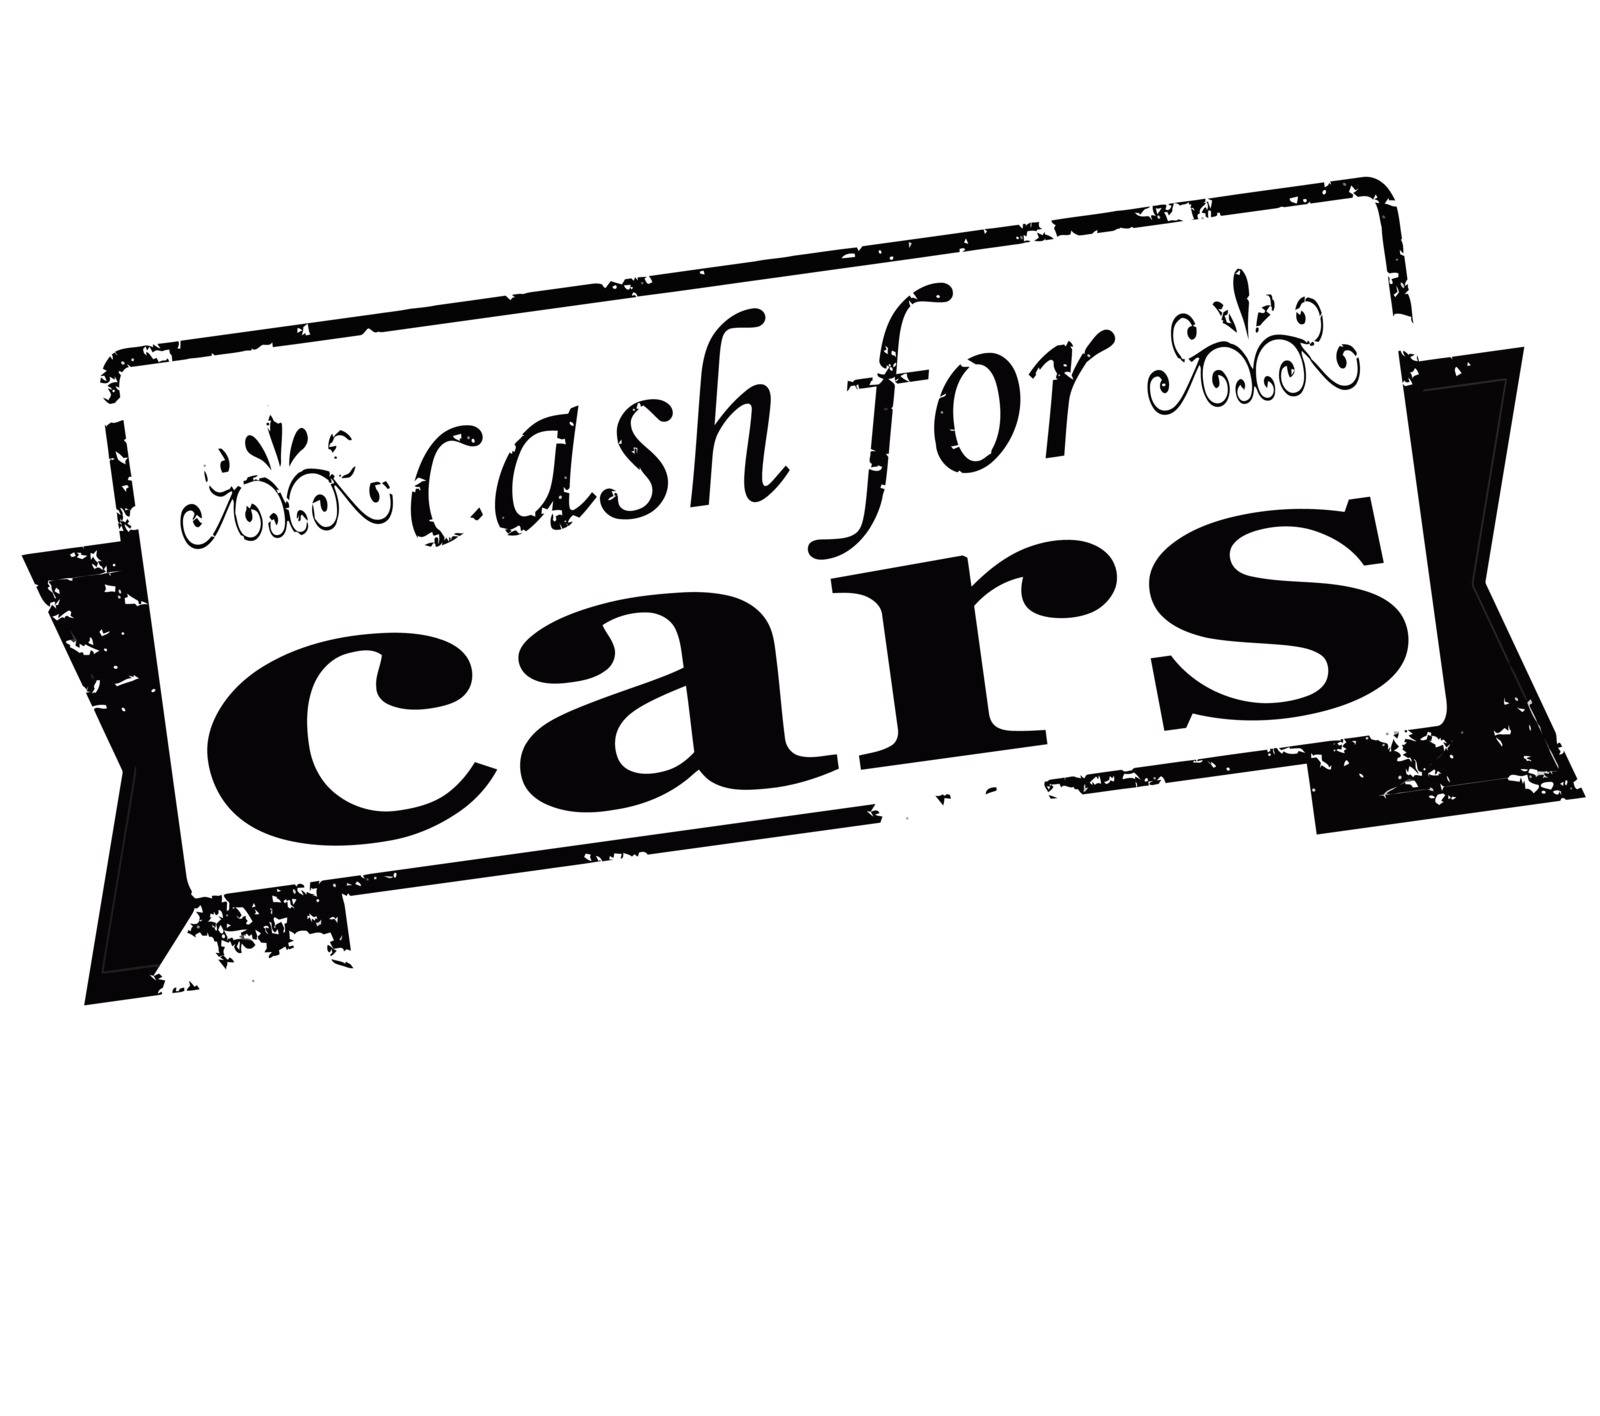 Cash for cars by carmenbobo